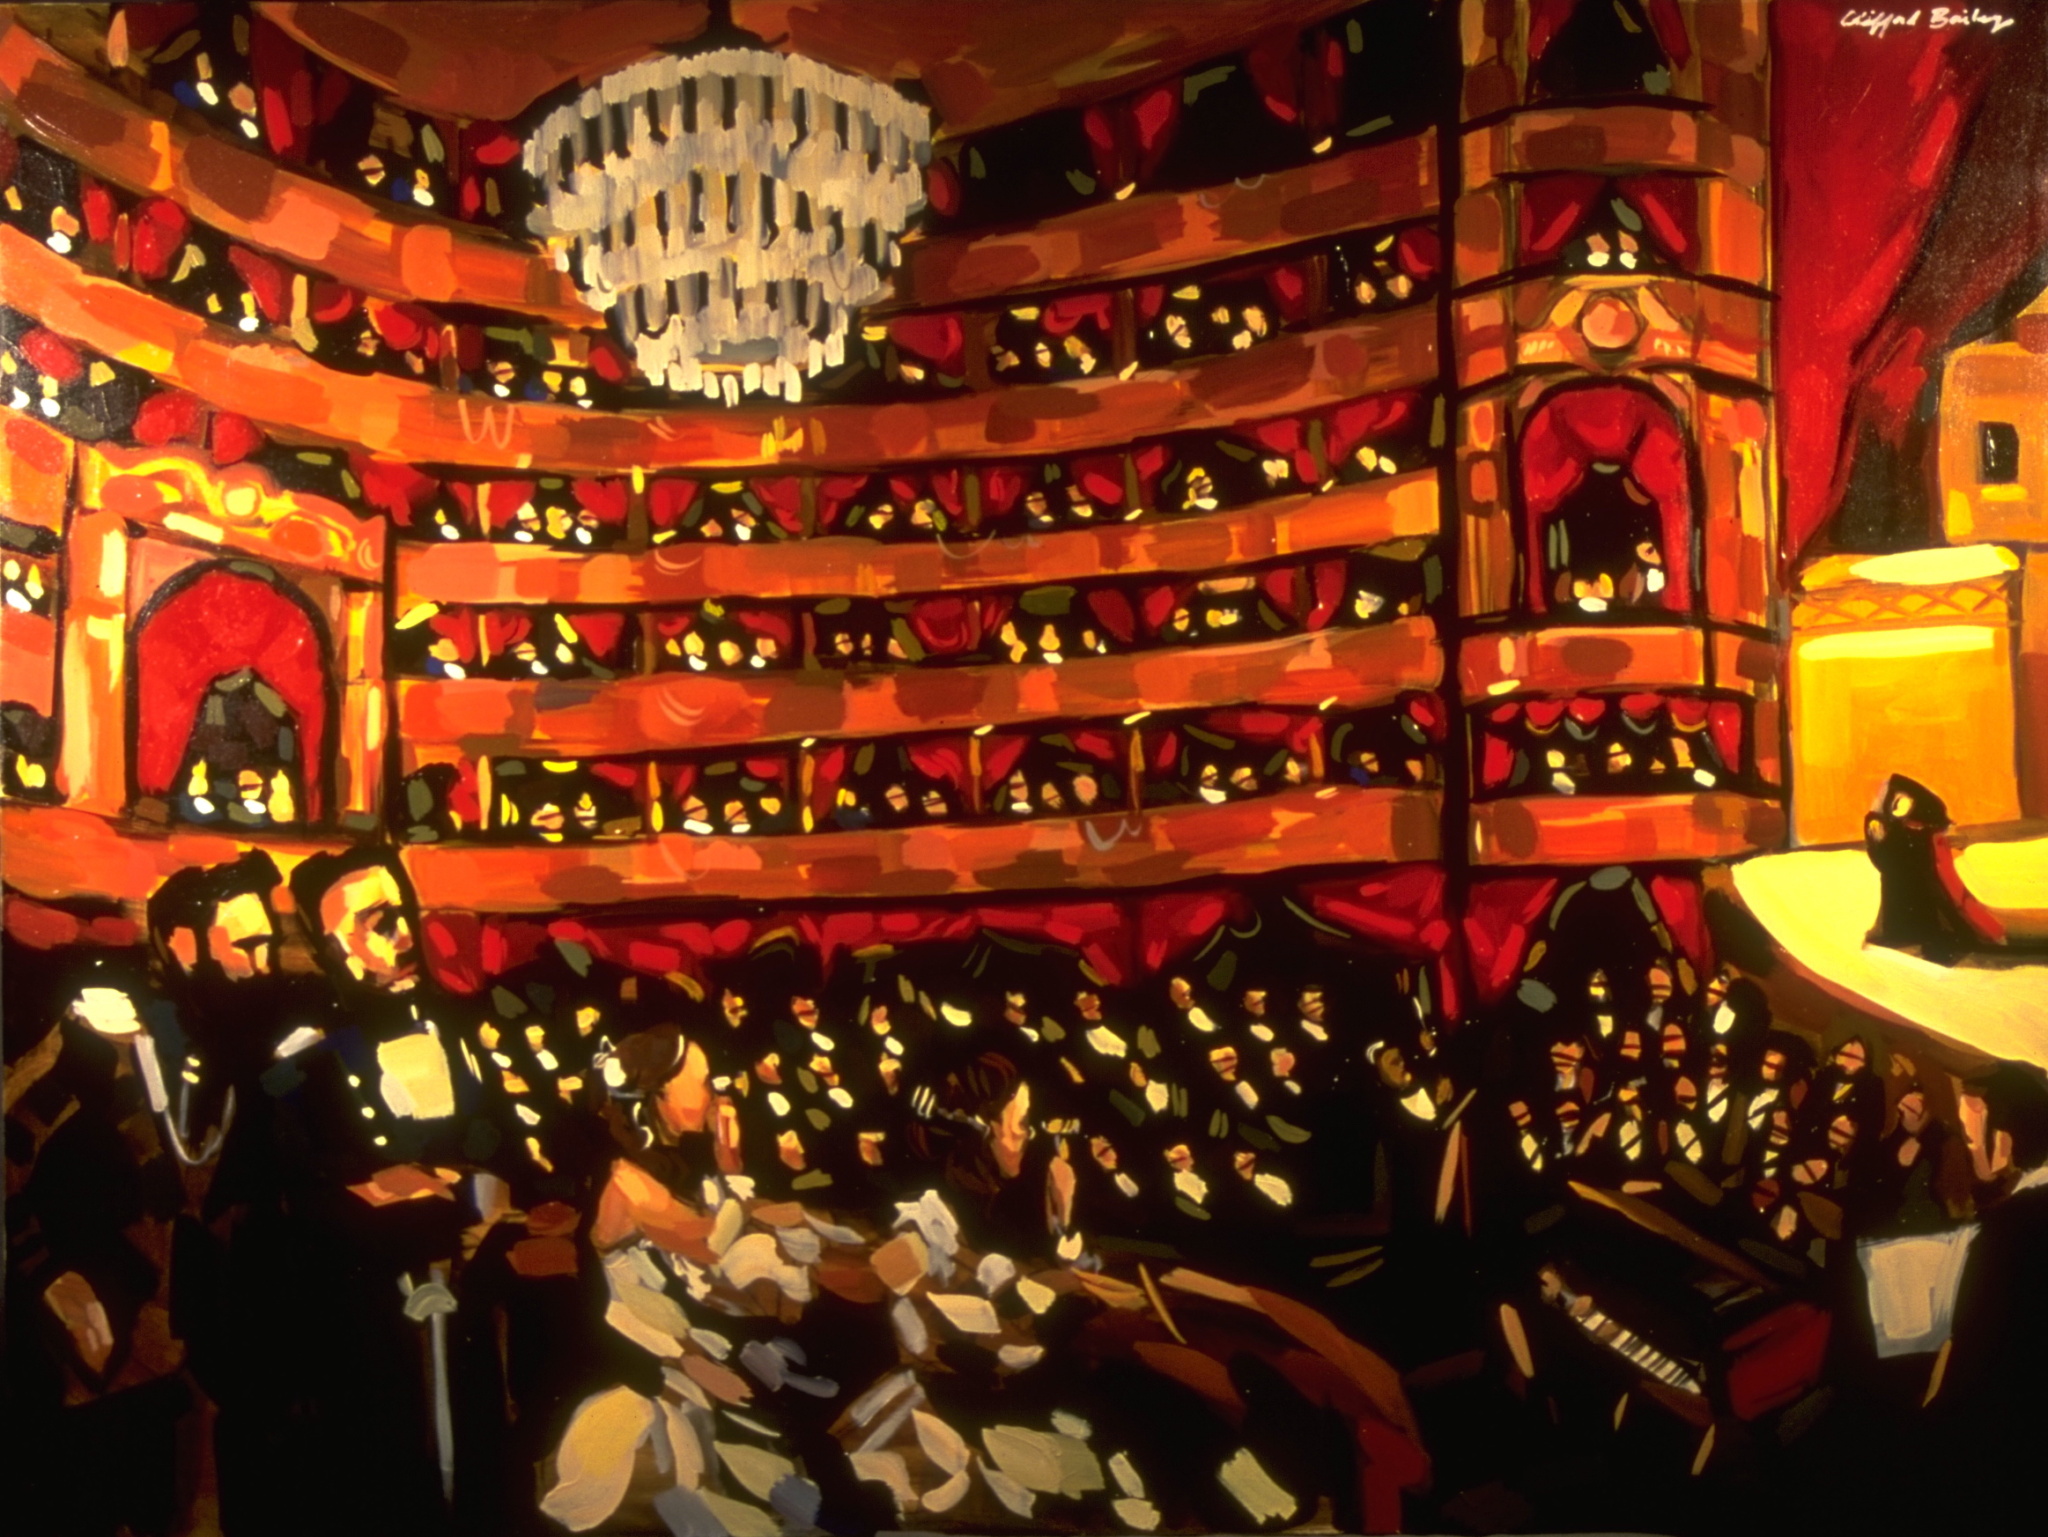 "The Grand Ballroom" by Clifford Bailey Fine Art